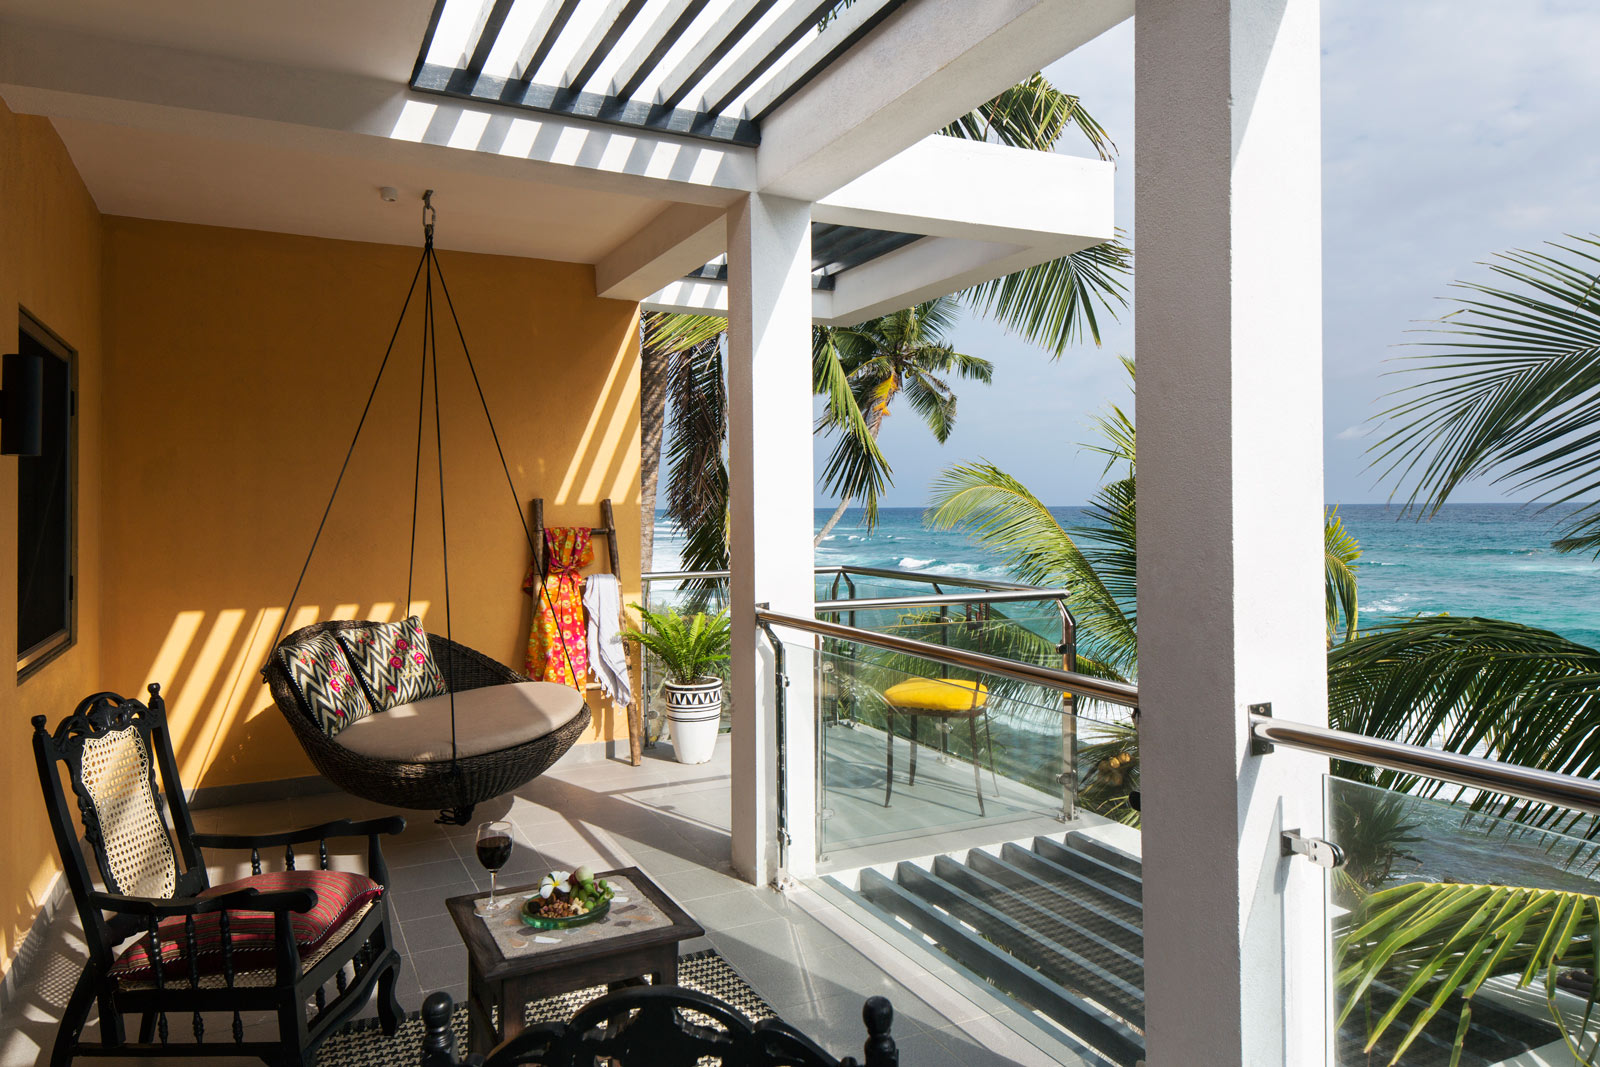 Balcony renovation home décor ideas - Beautiful Homes